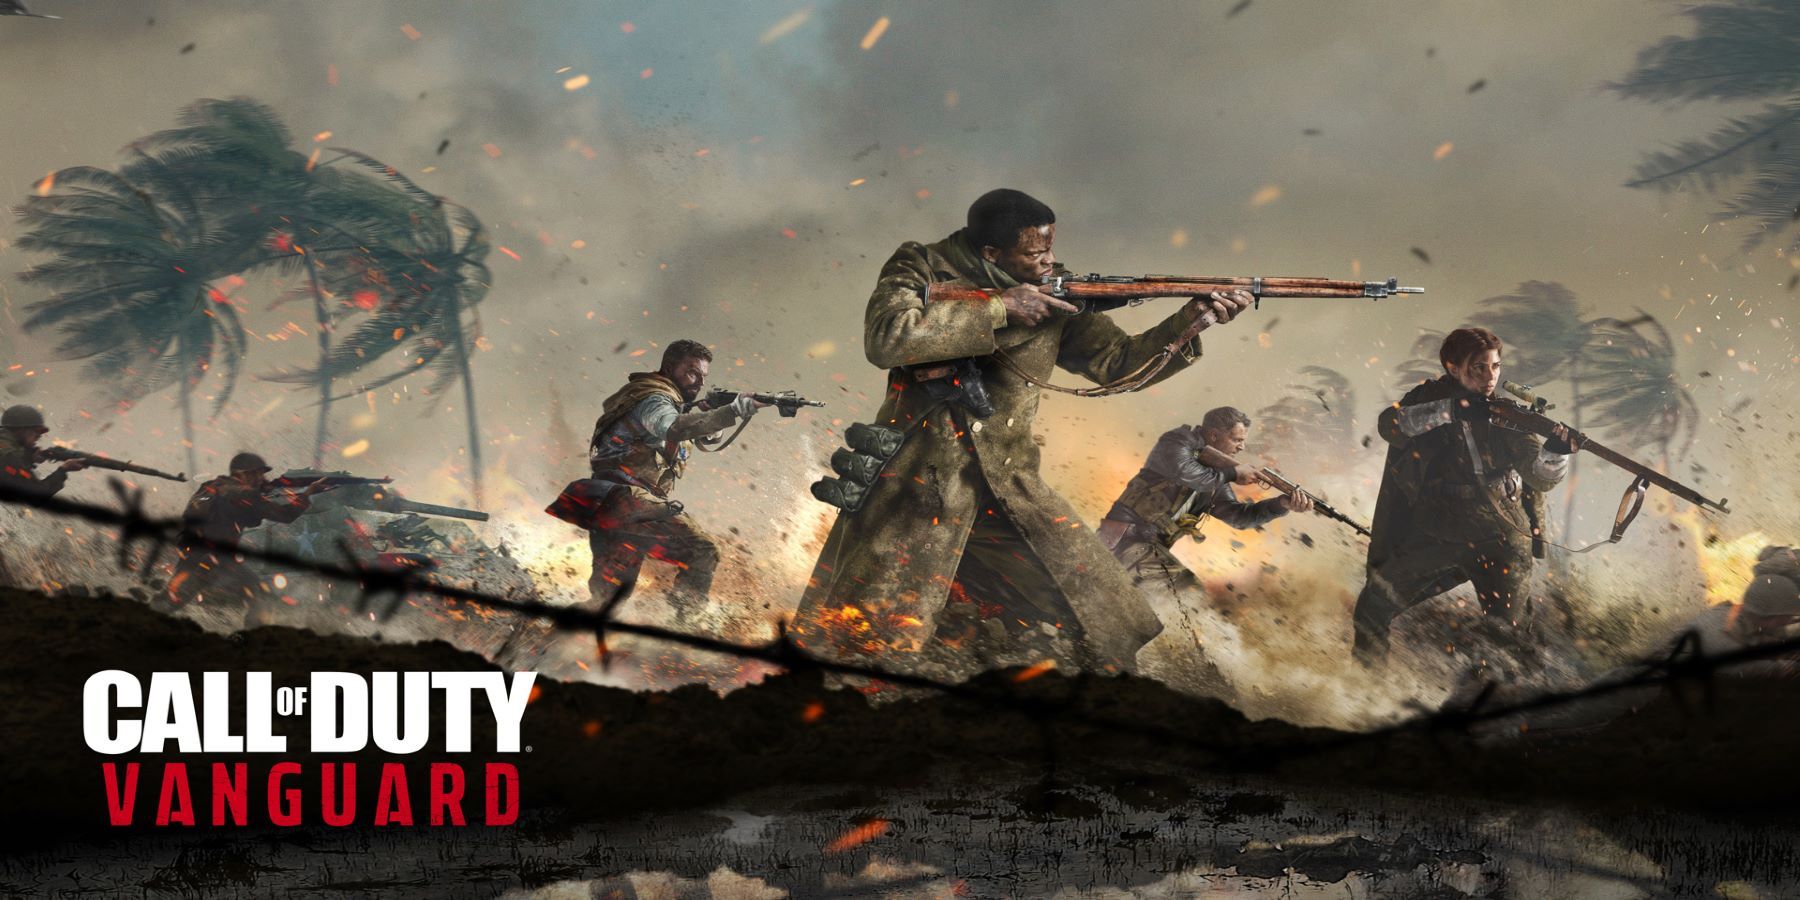 Call of Duty Vanguard Multiplayer trailer